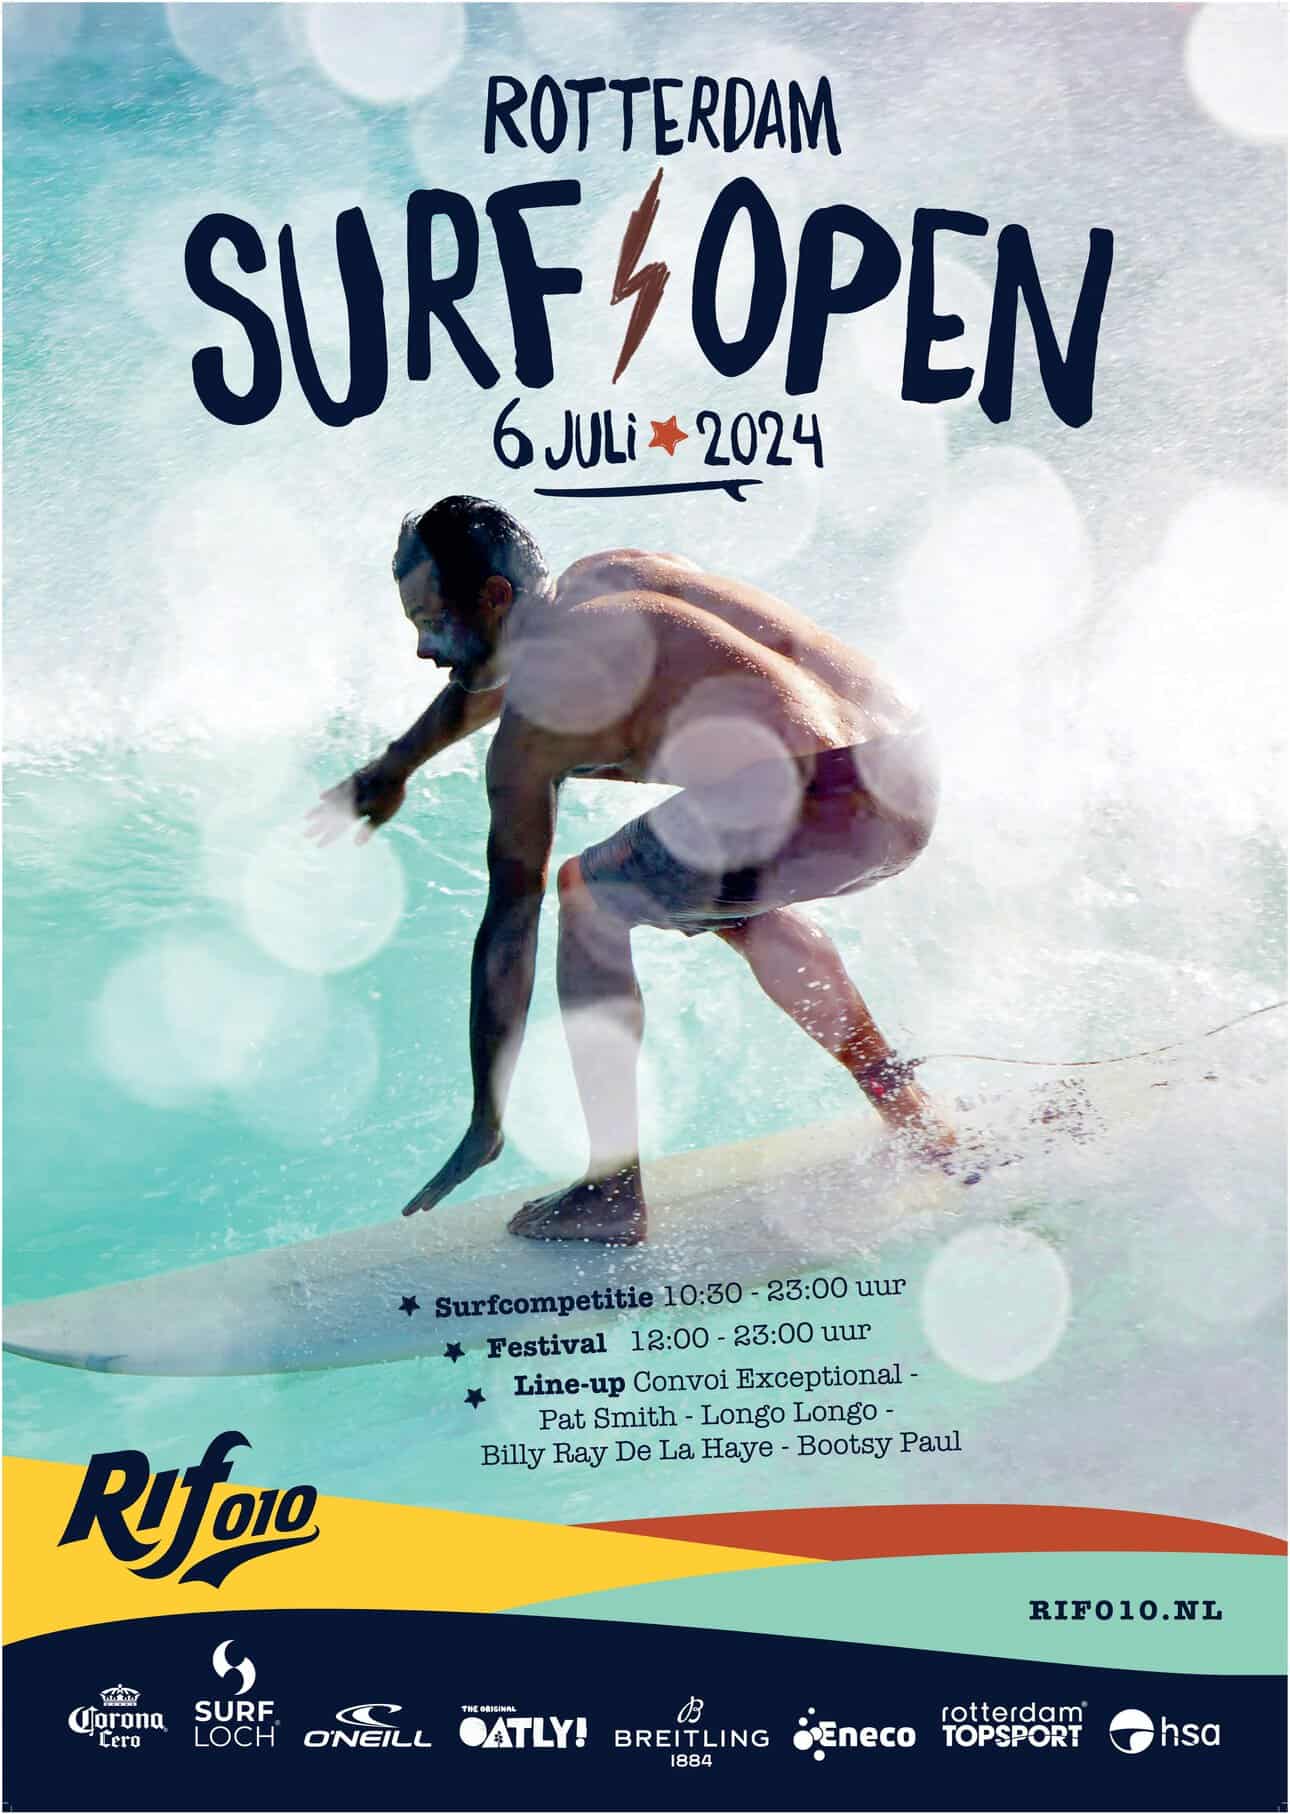 Rotterdam Surf Open at RiF010